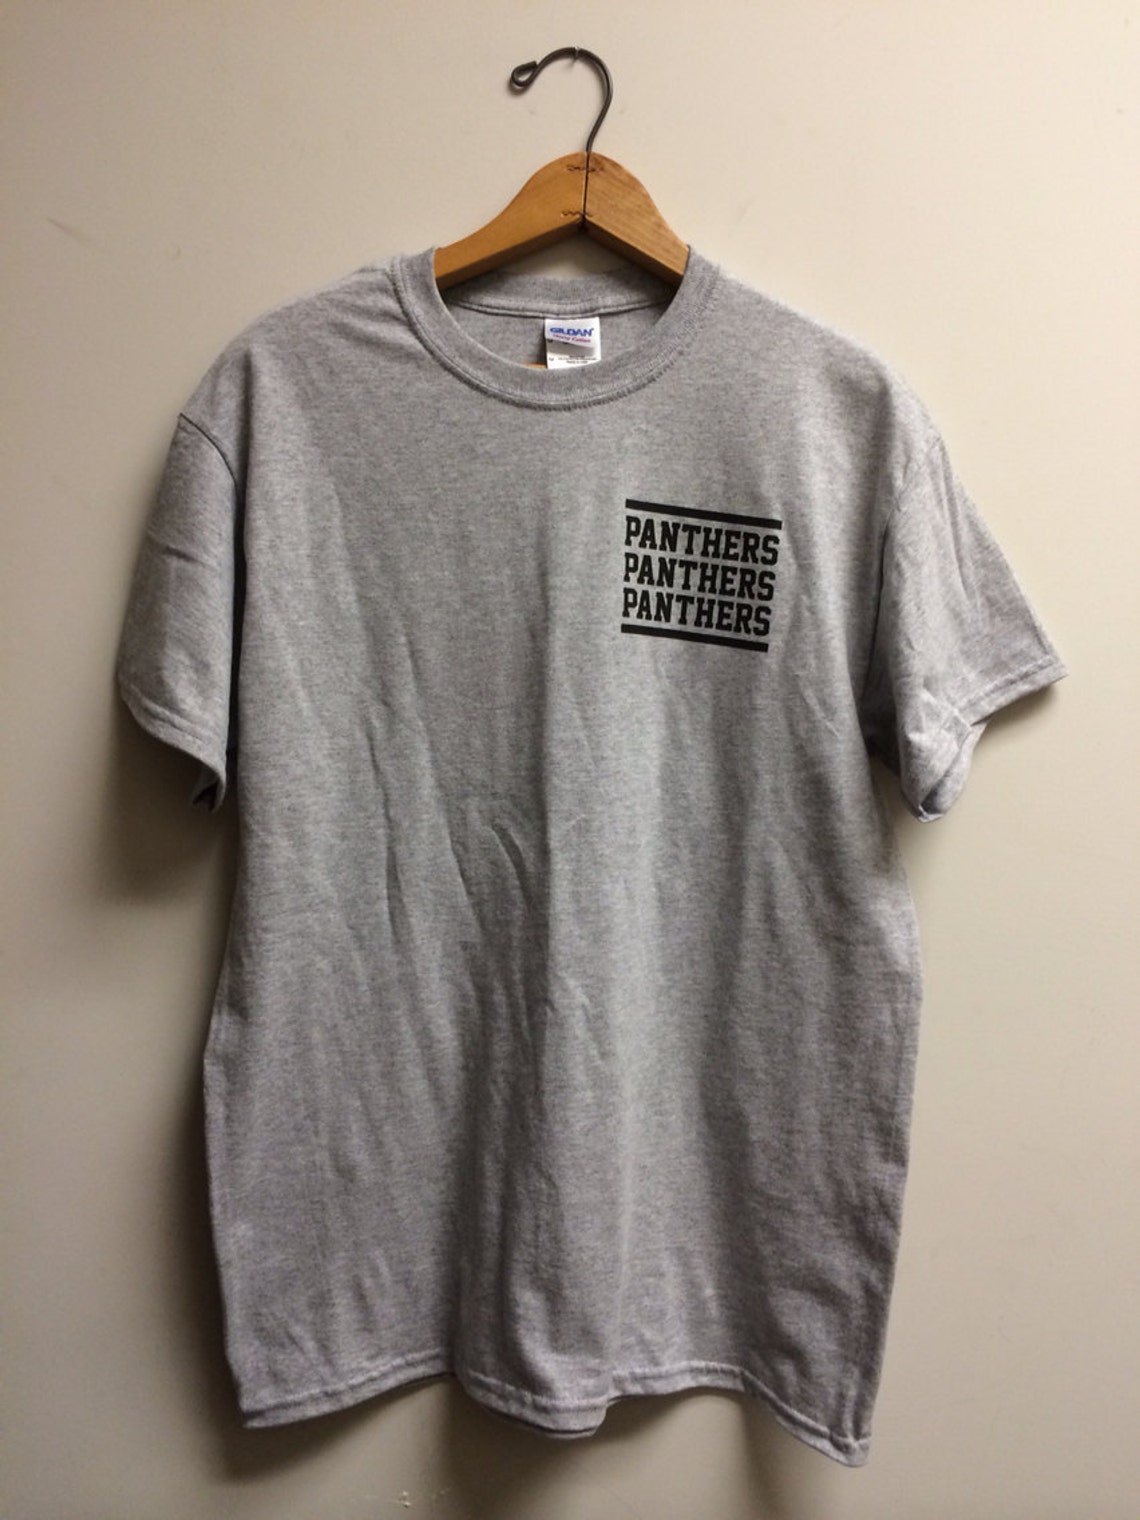 Panthers : FNL / Youth Crew Hardcore Tee Shirt | Etsy